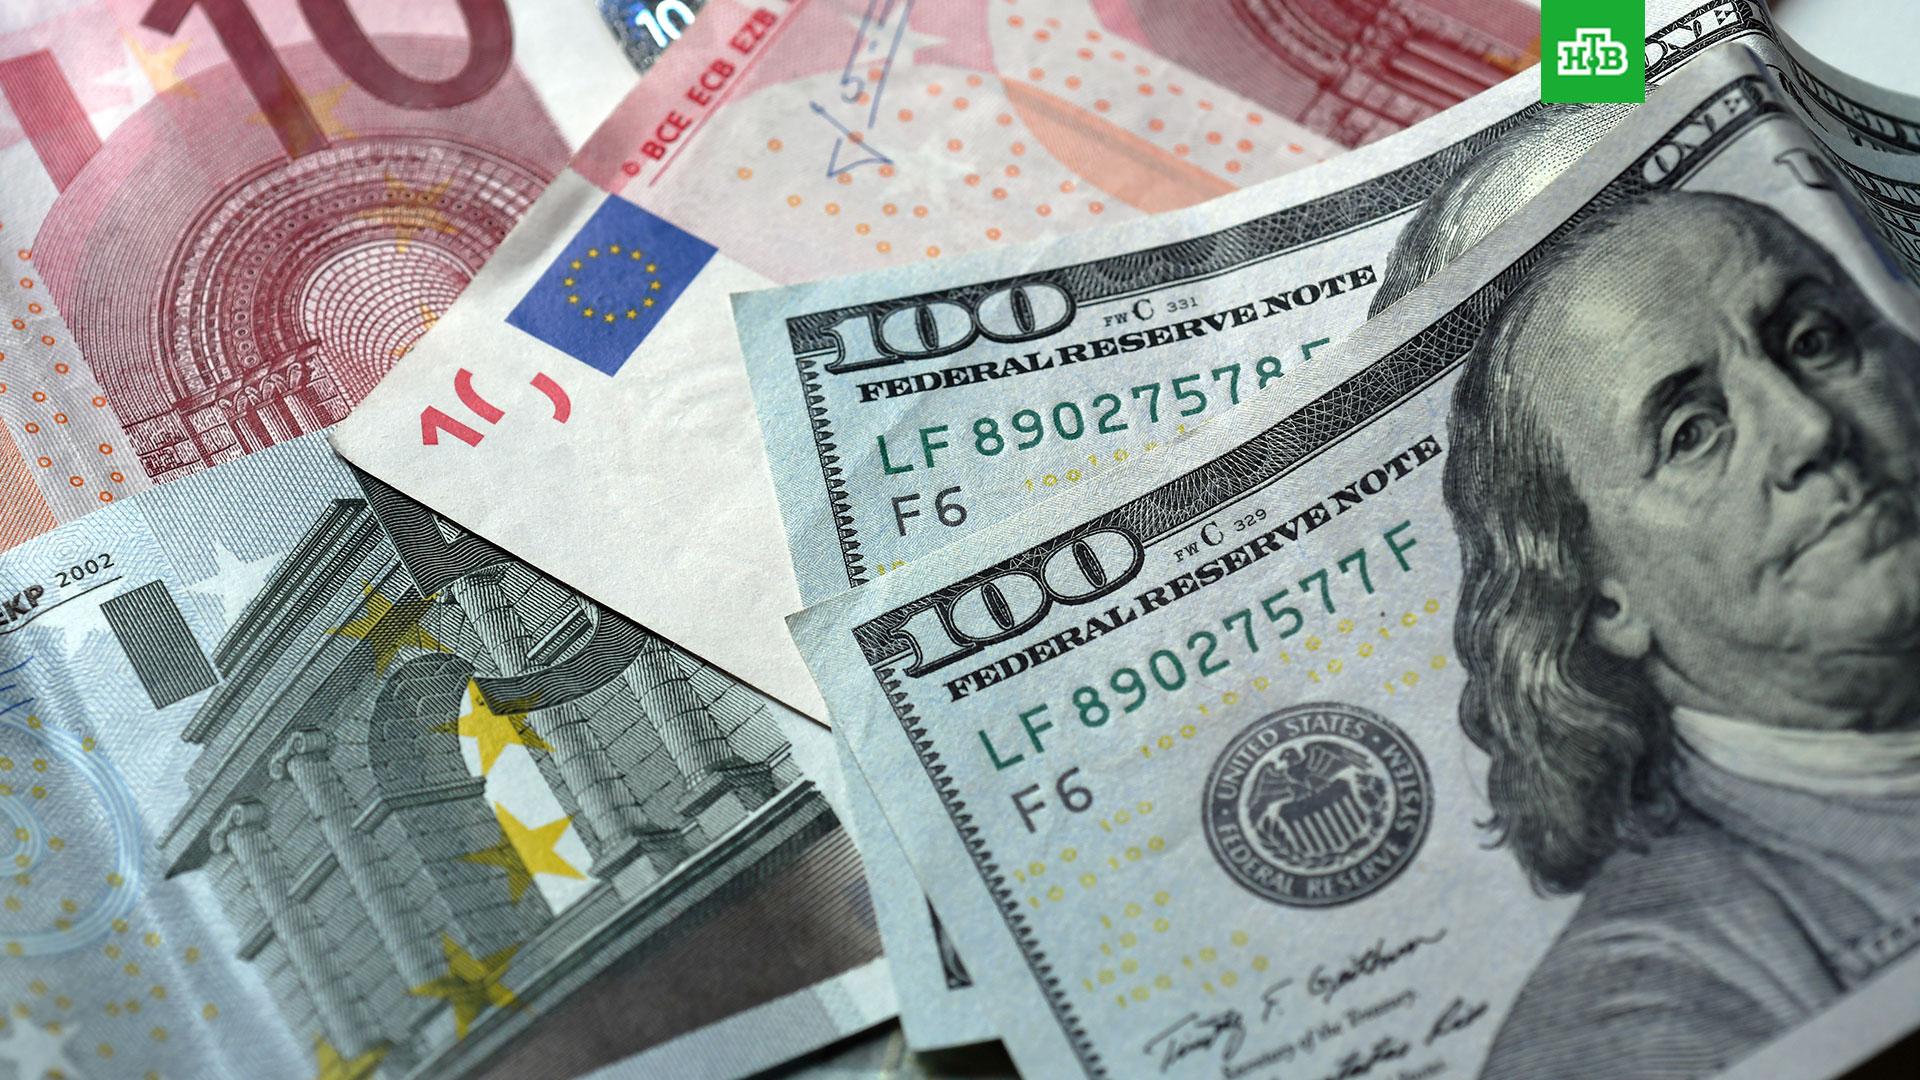 Евро доллар фунт. Доллар и евро. Доллар евро фунт. Доллар евро рубль. Доллар (валюта).